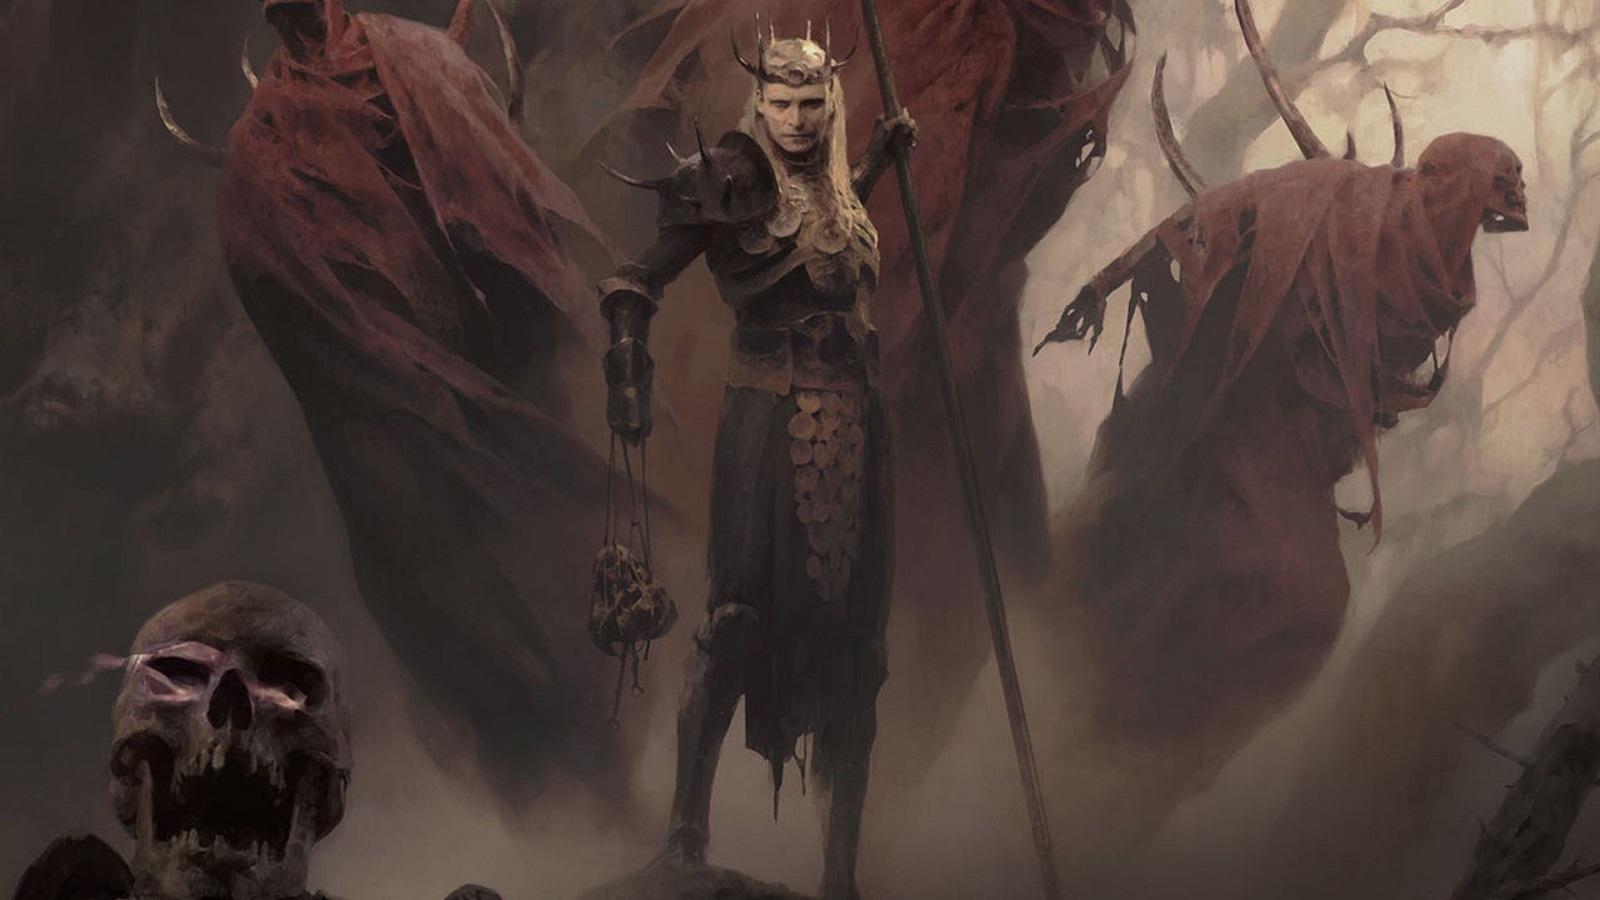 Diablo 4 official artwork